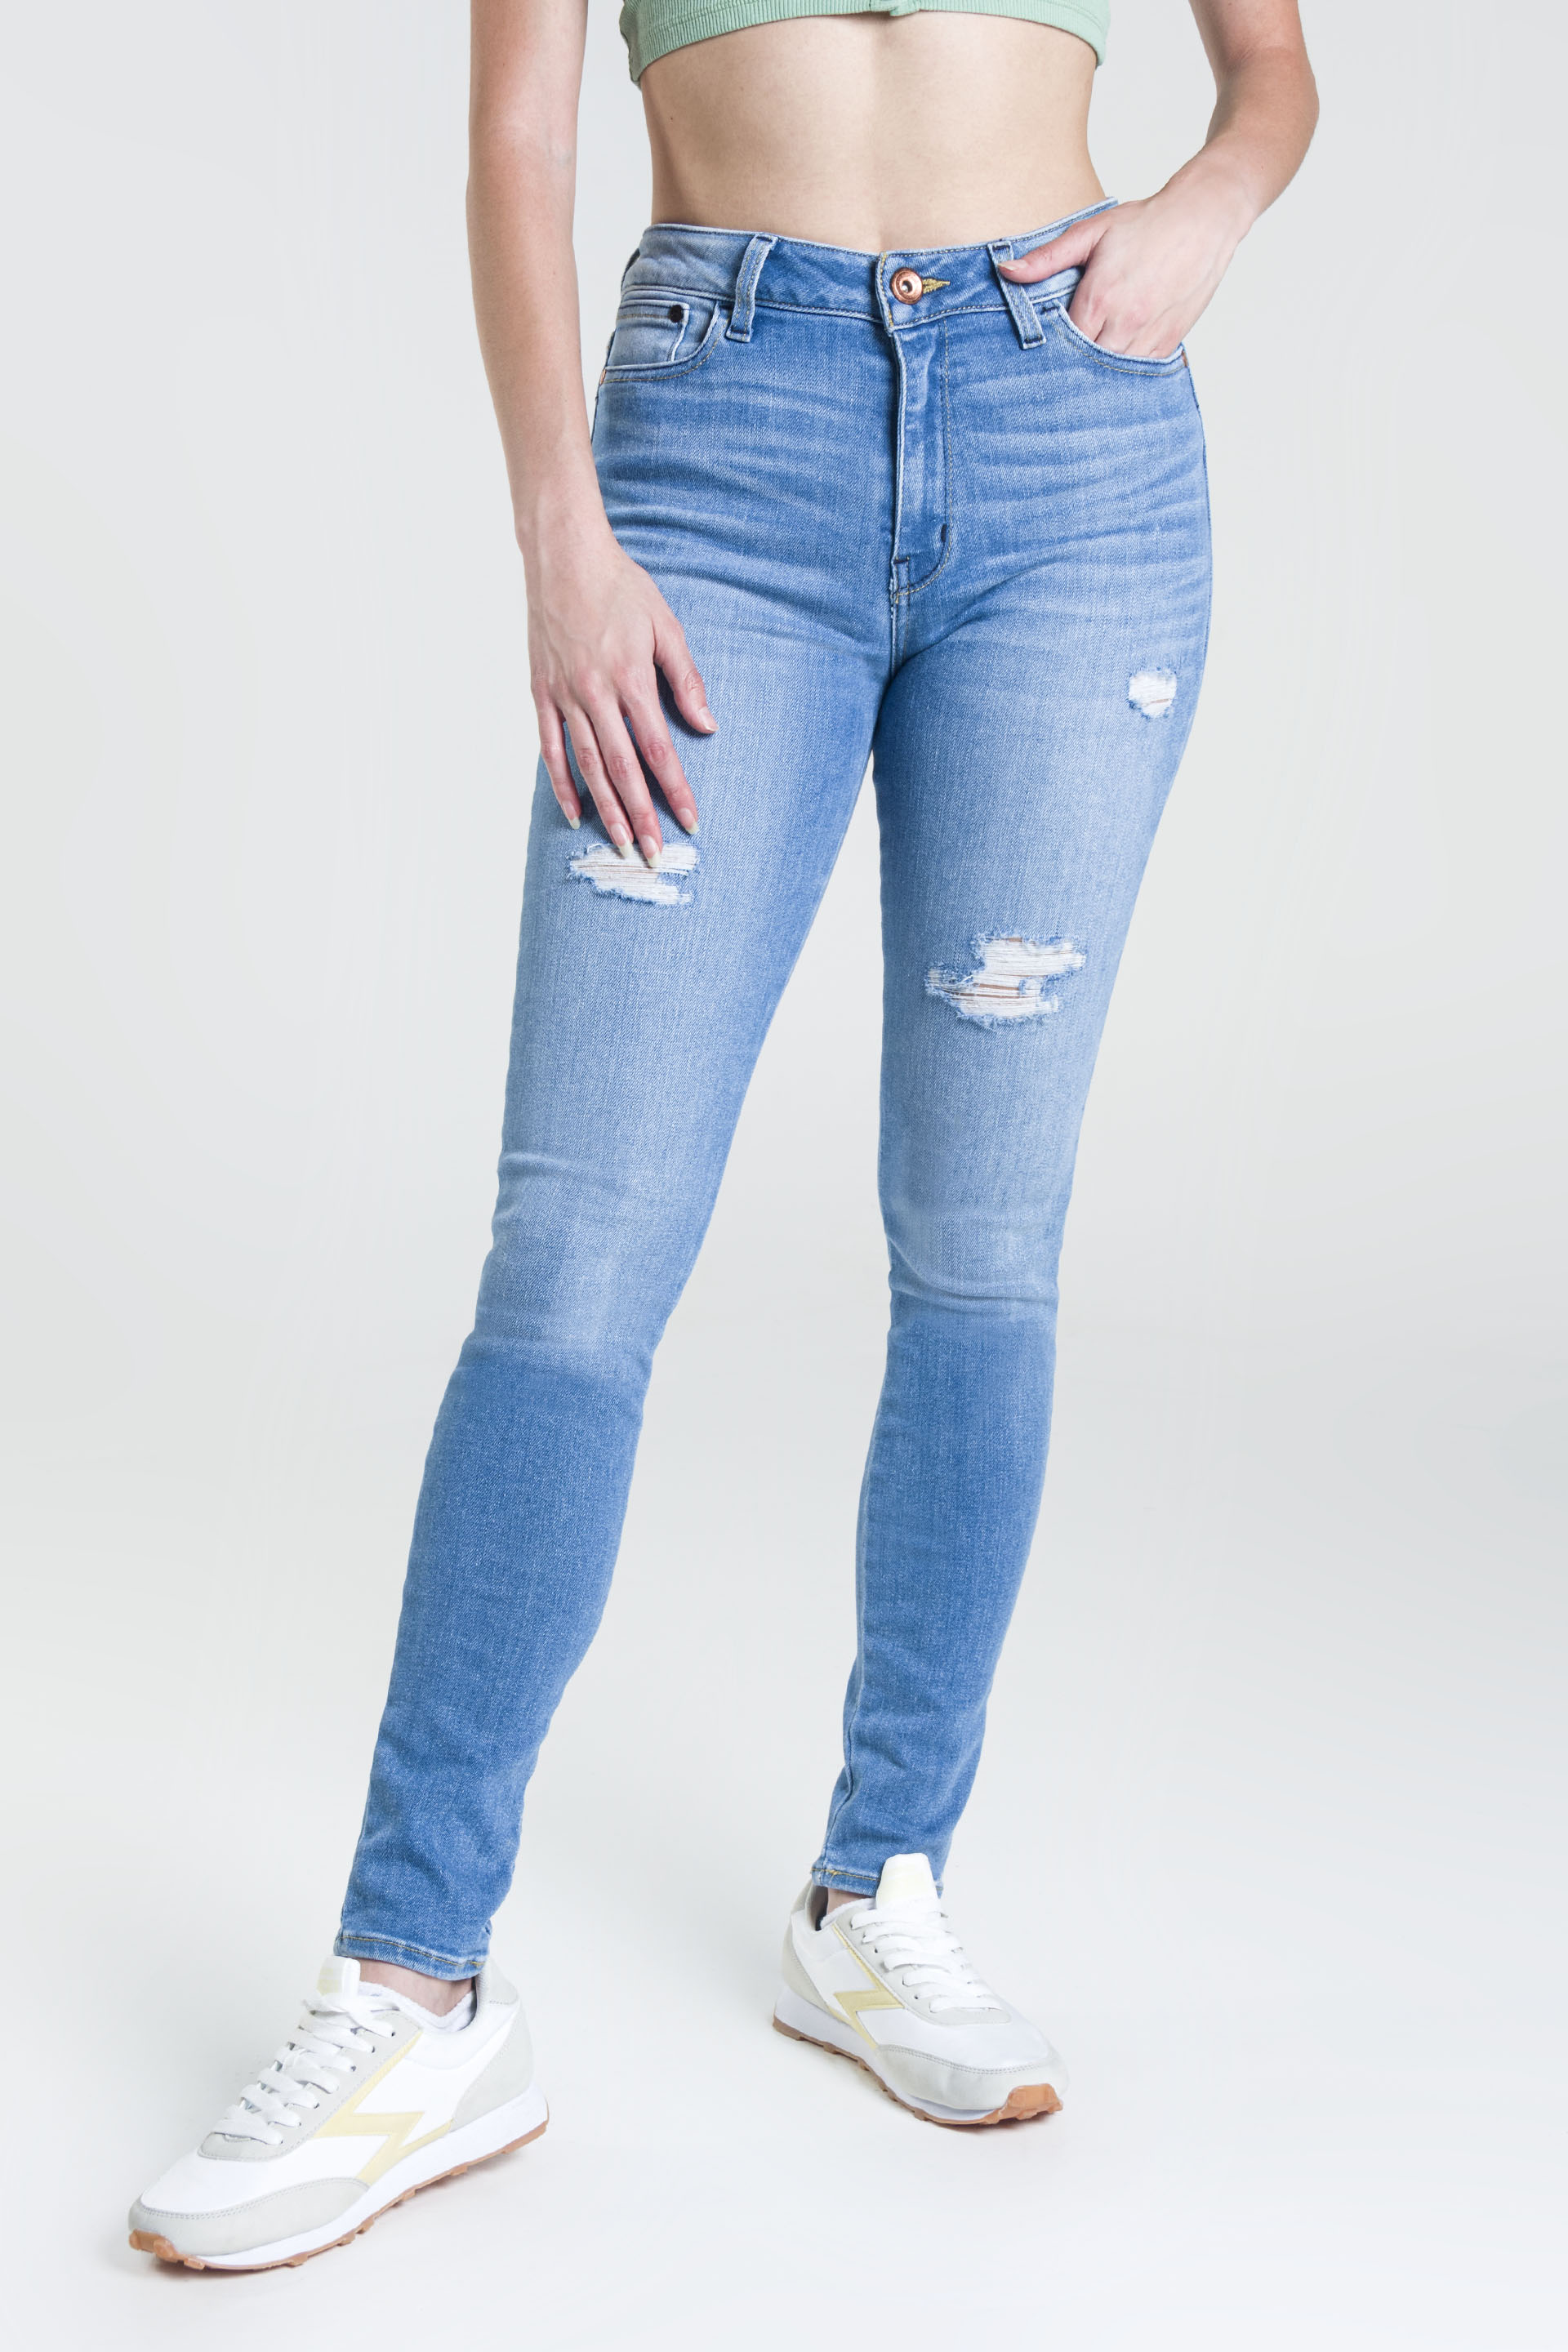 Jeans Súper Skinny Oggi - Lucy para Mezclilla Azul Claro 2222108